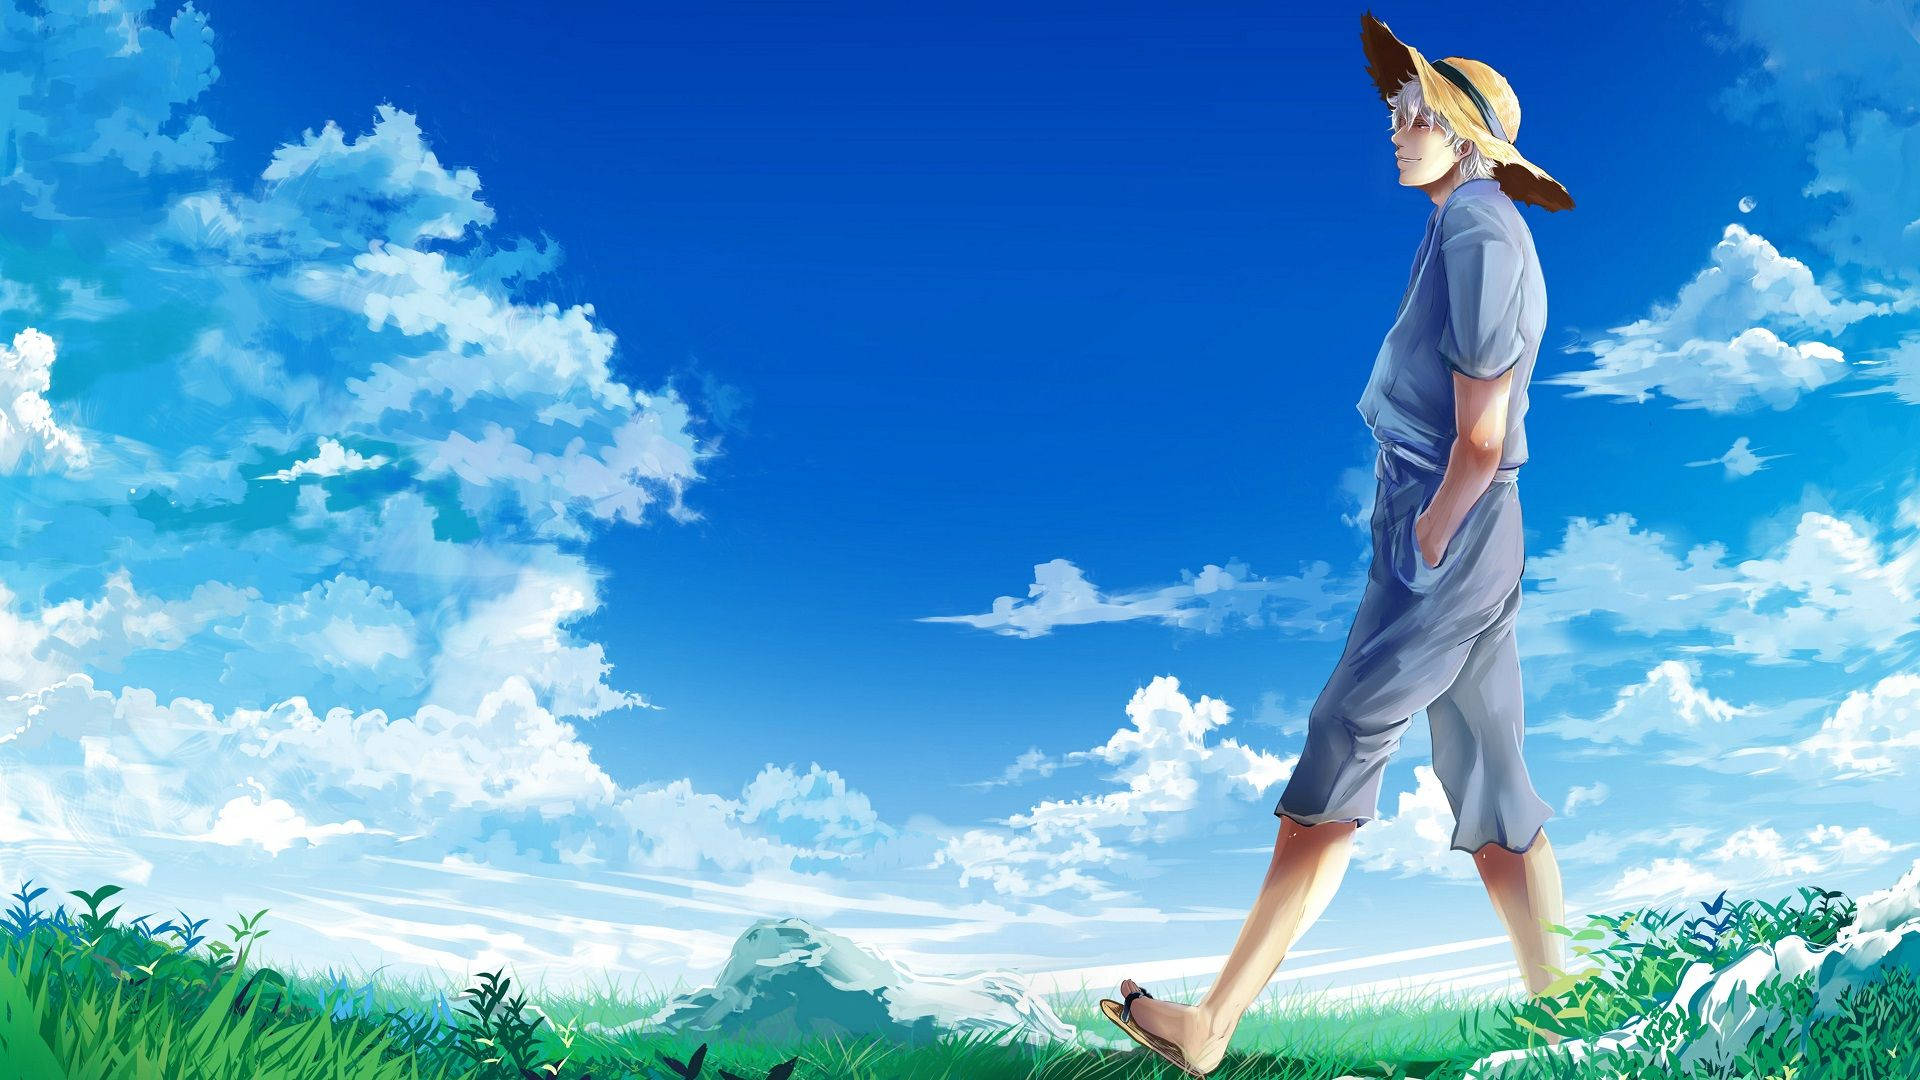 Gintama Gintoki Walking On Fields Background